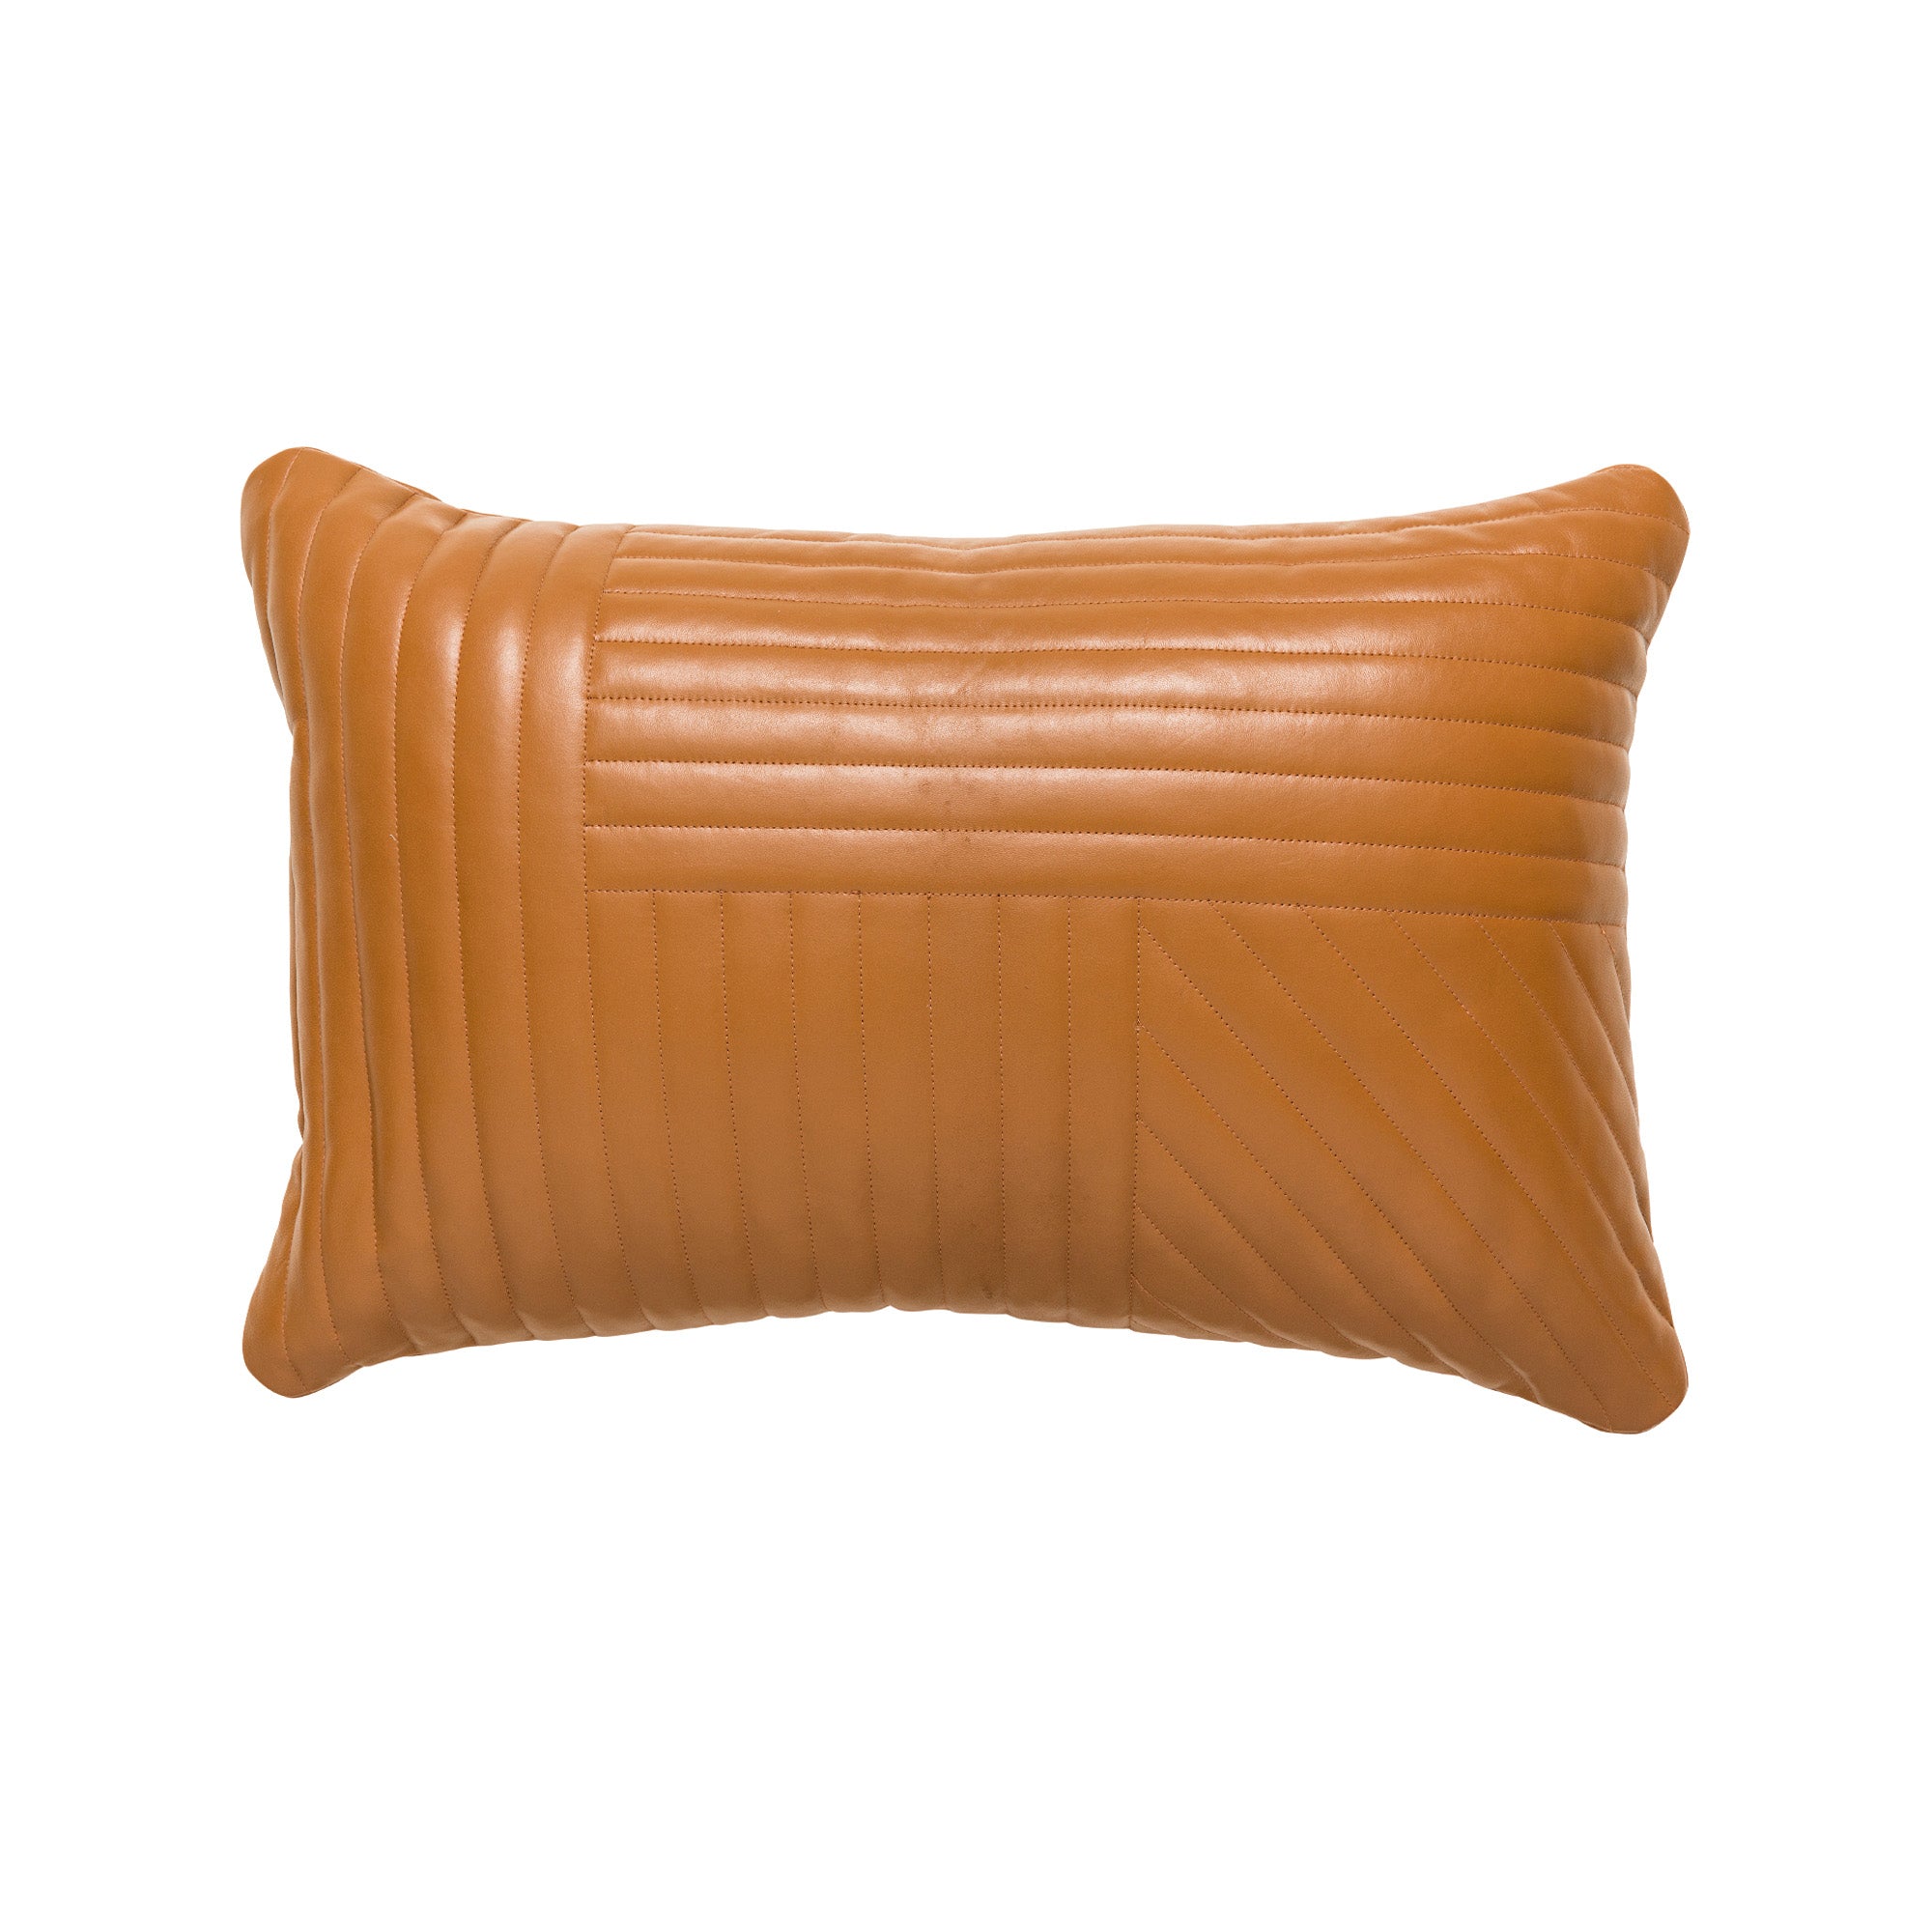 Cuero Leather Cushion Tan 60x40